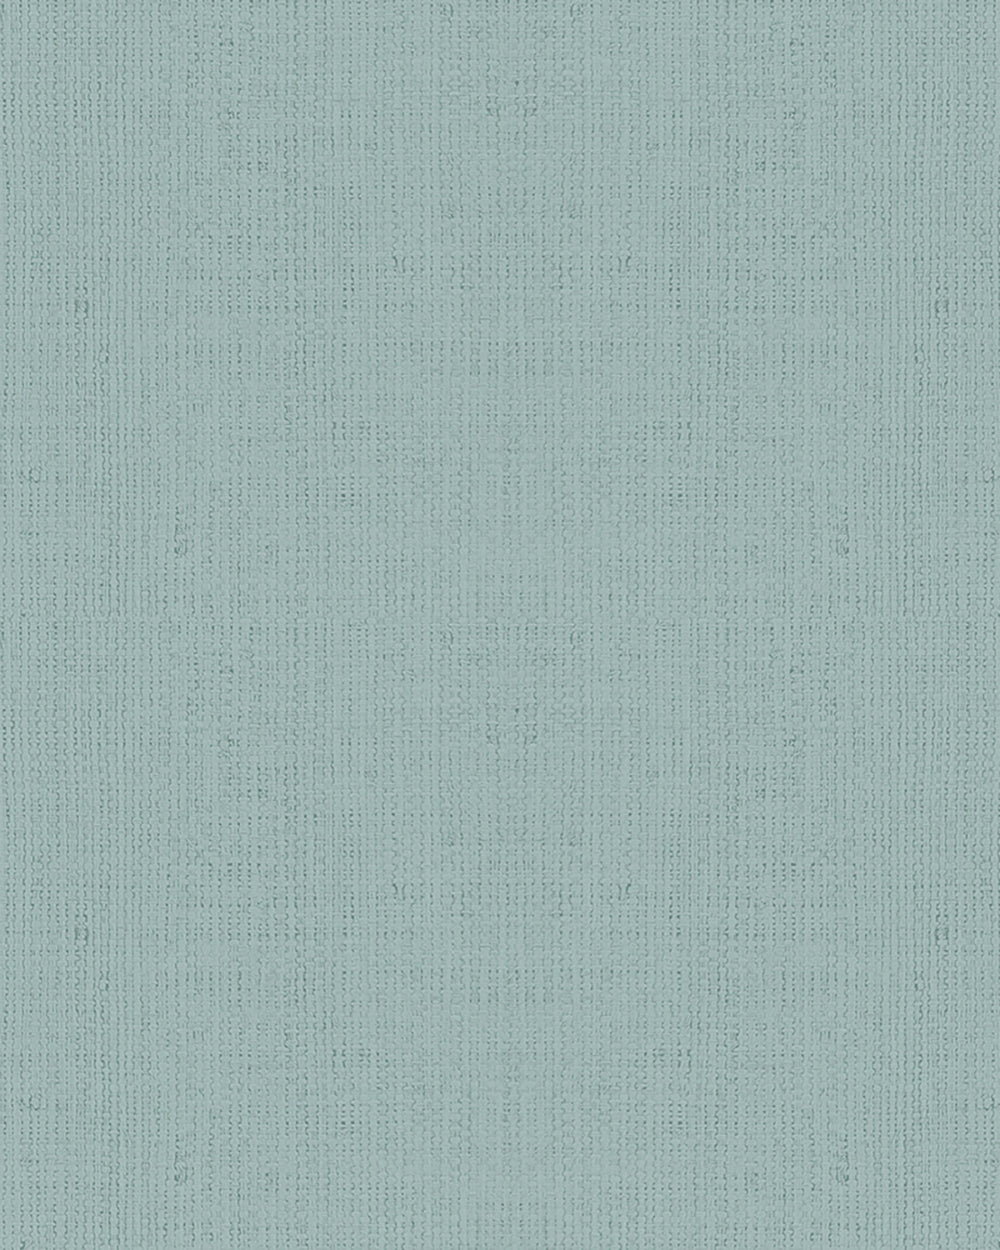 Casual - Textured Rattan Plains plain wallpaper Marburg Roll Green  30453